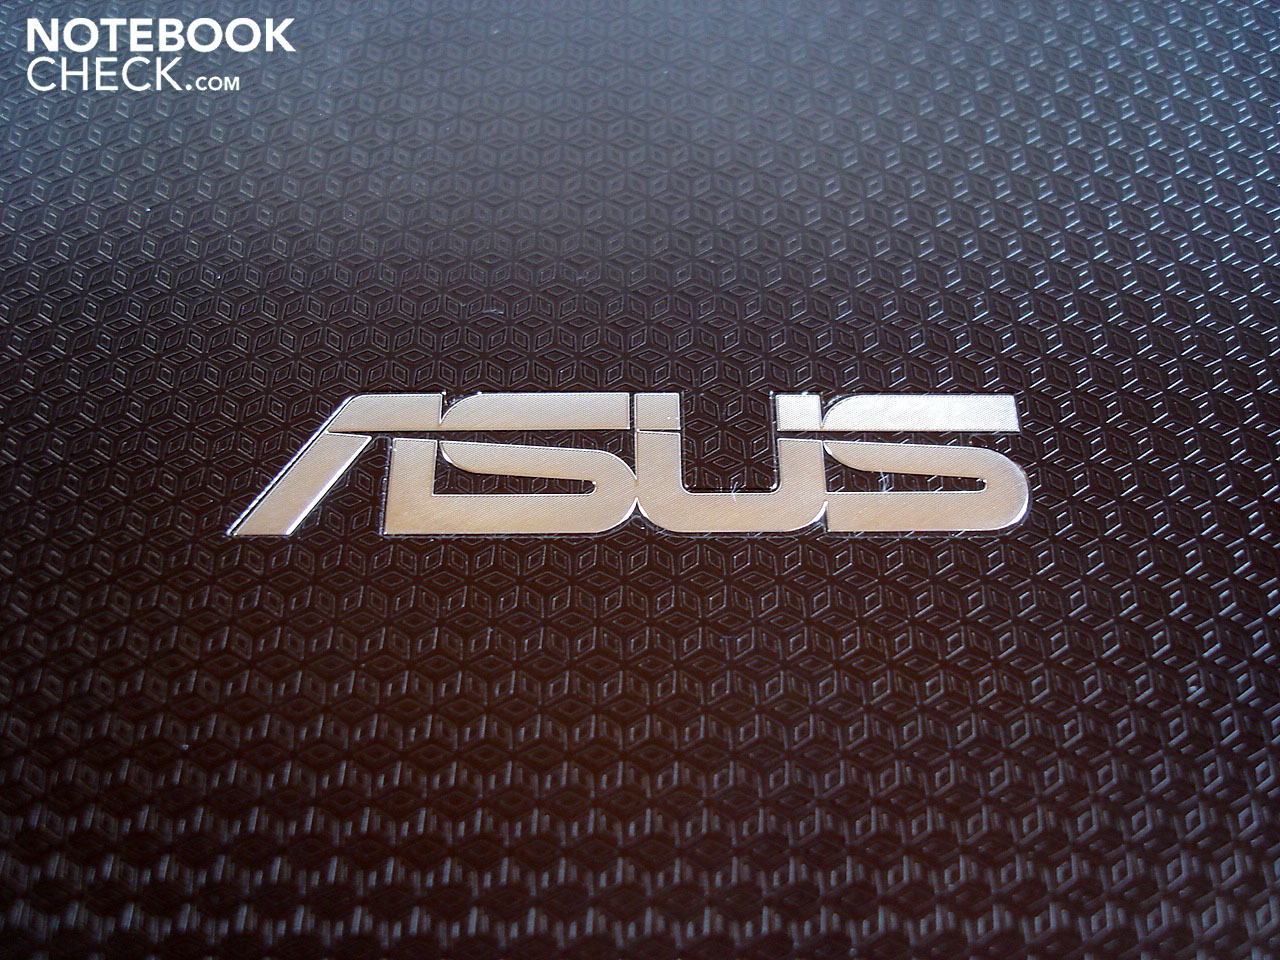 Наклейка asus. Наклейка асус. Наклейка ASUS логотип. Наклейки на ноутбук ASUS. Наклейки асус ТАФ.